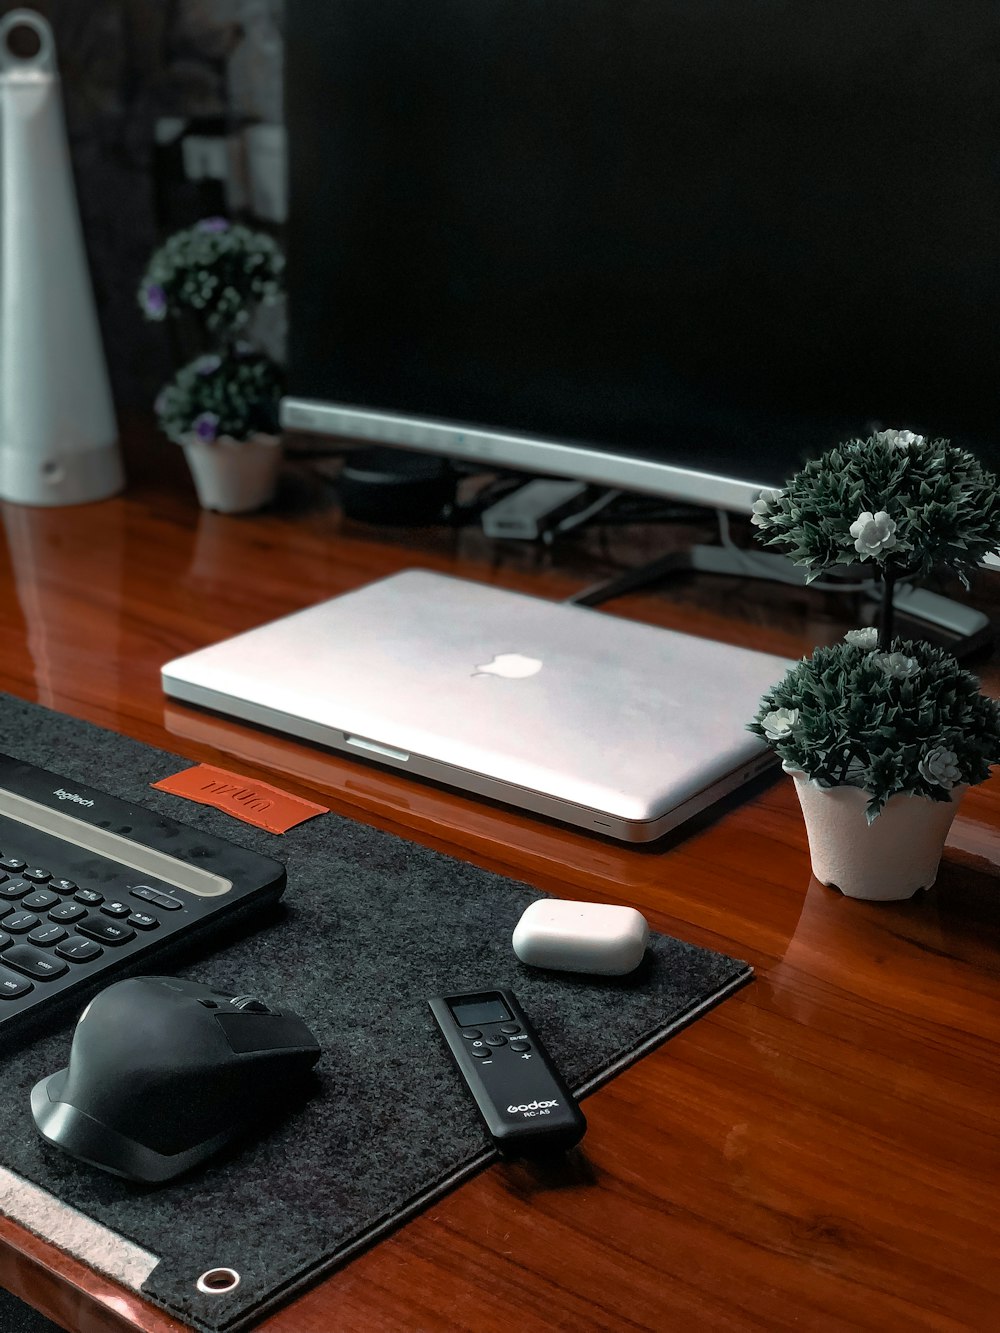 silver macbook beside black computer keyboard on brown wooden table